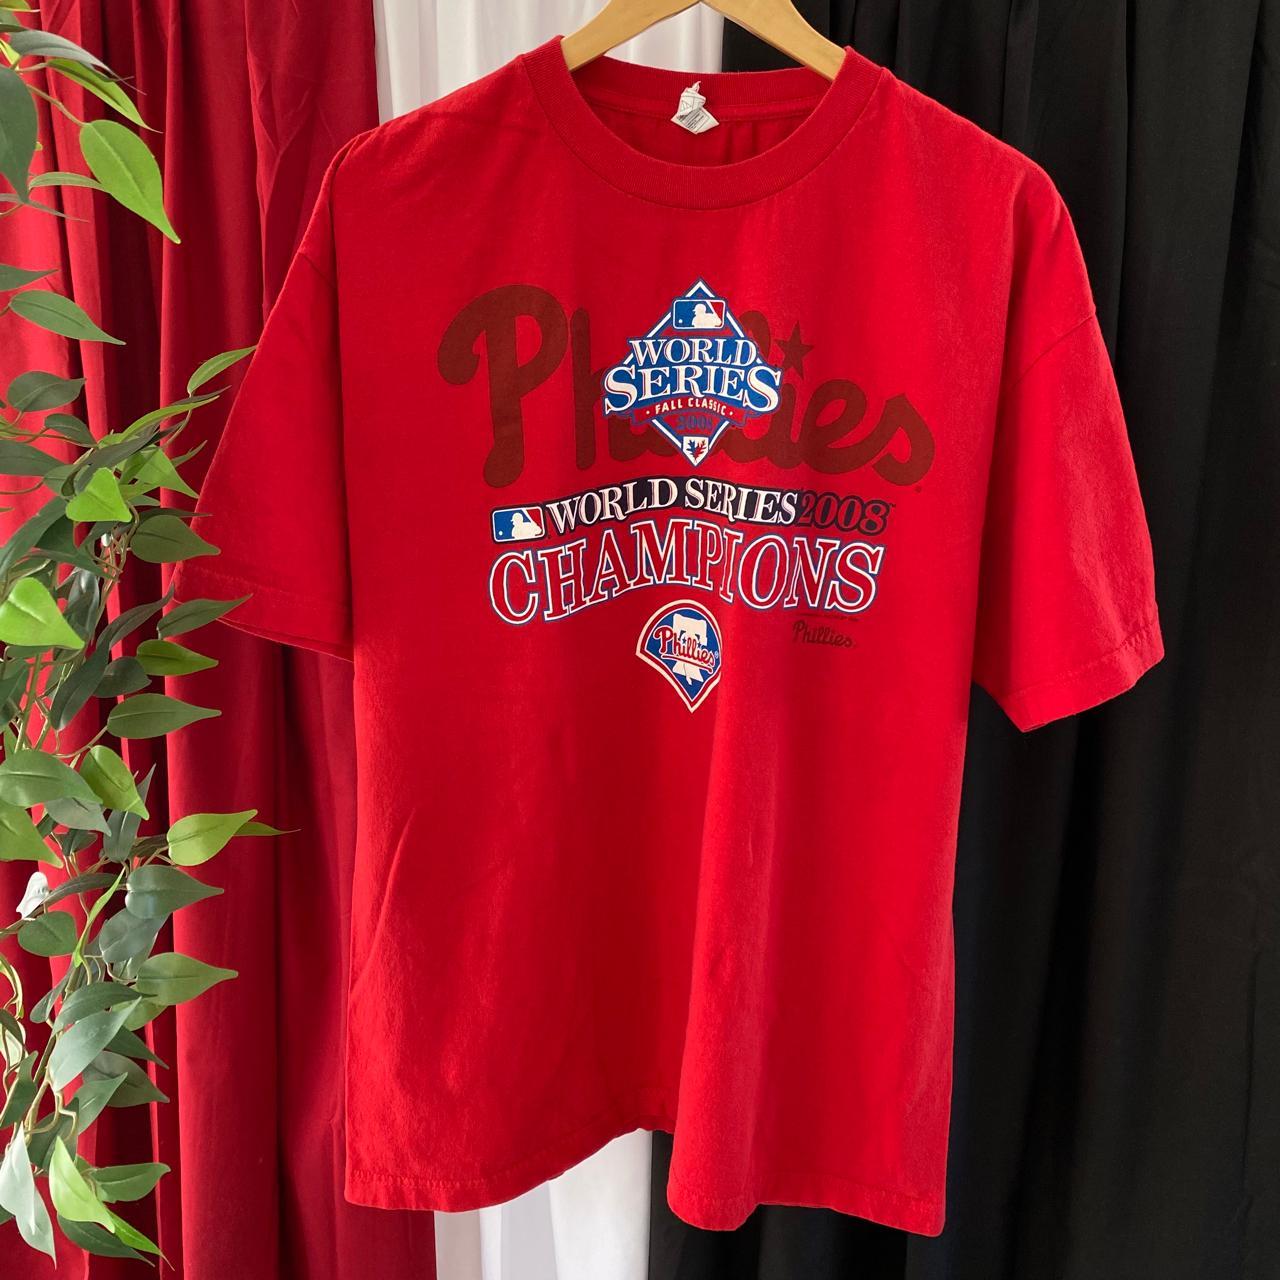 2008 Philadelphia Phillies World Series Champions MLB T Shirt Size